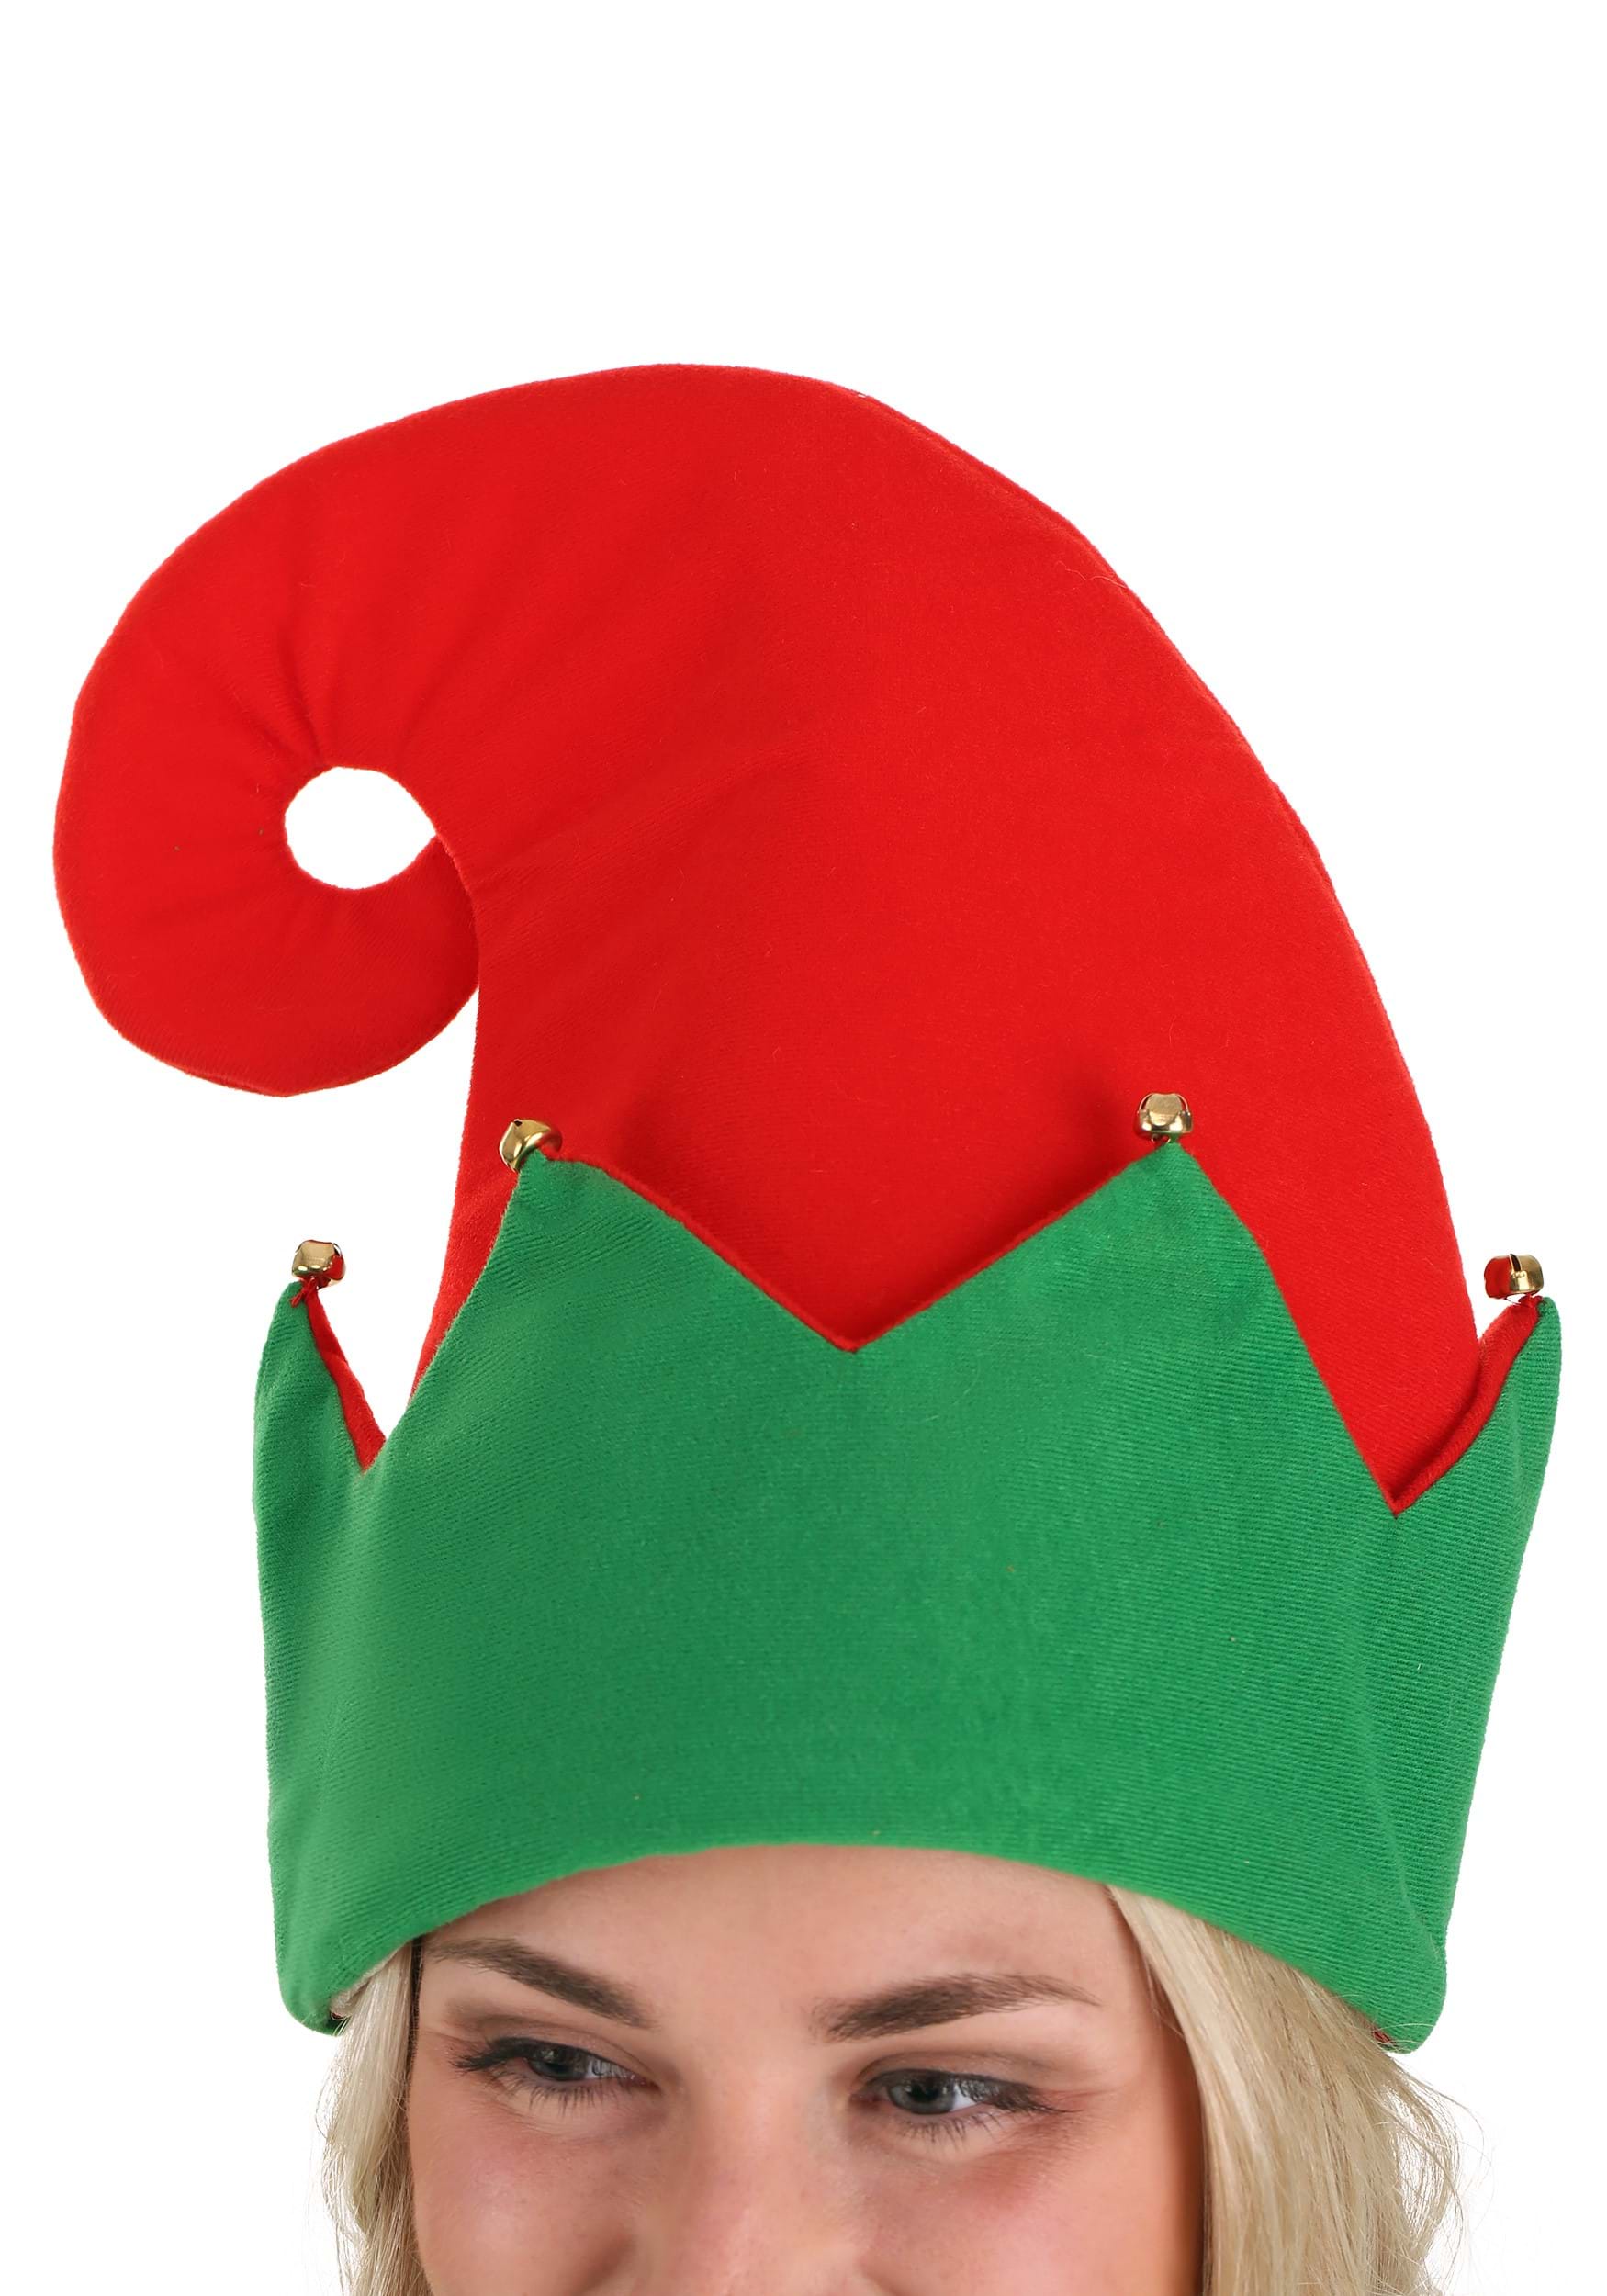 Women's Holiday Elf Costume